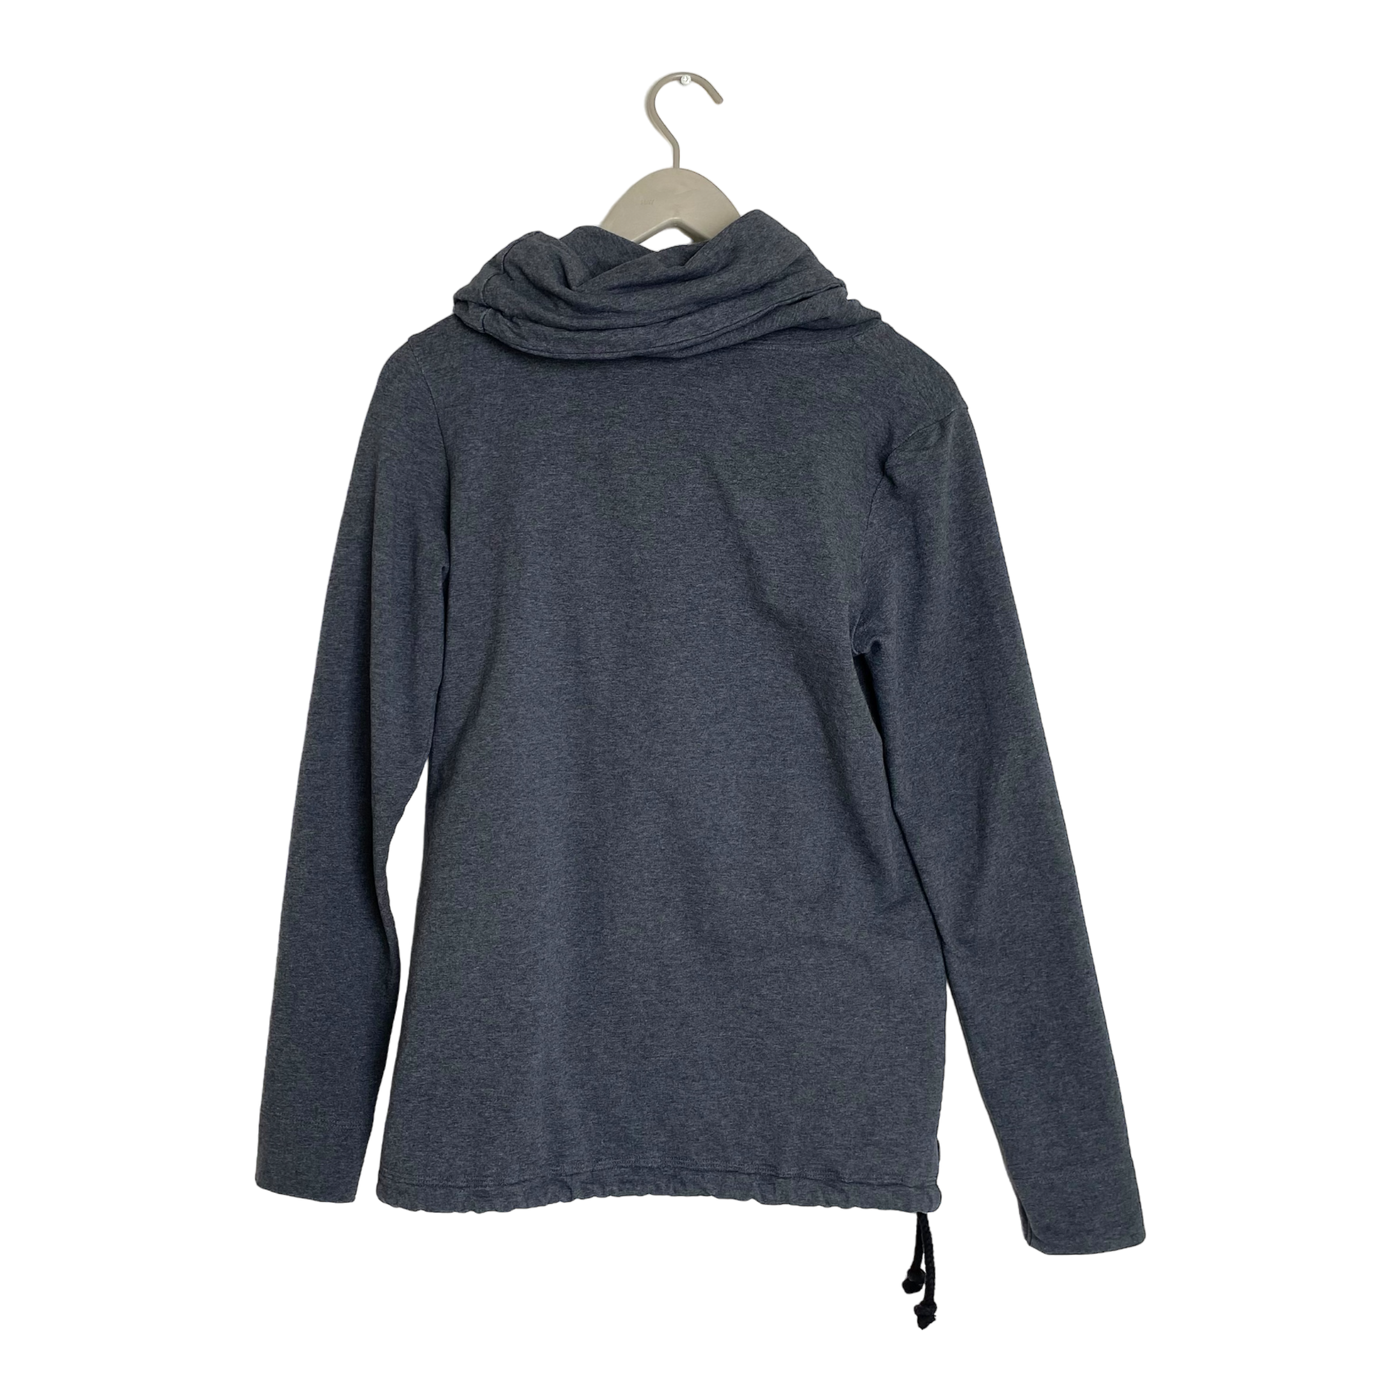 Ommellinen hoodie, grey | woman M